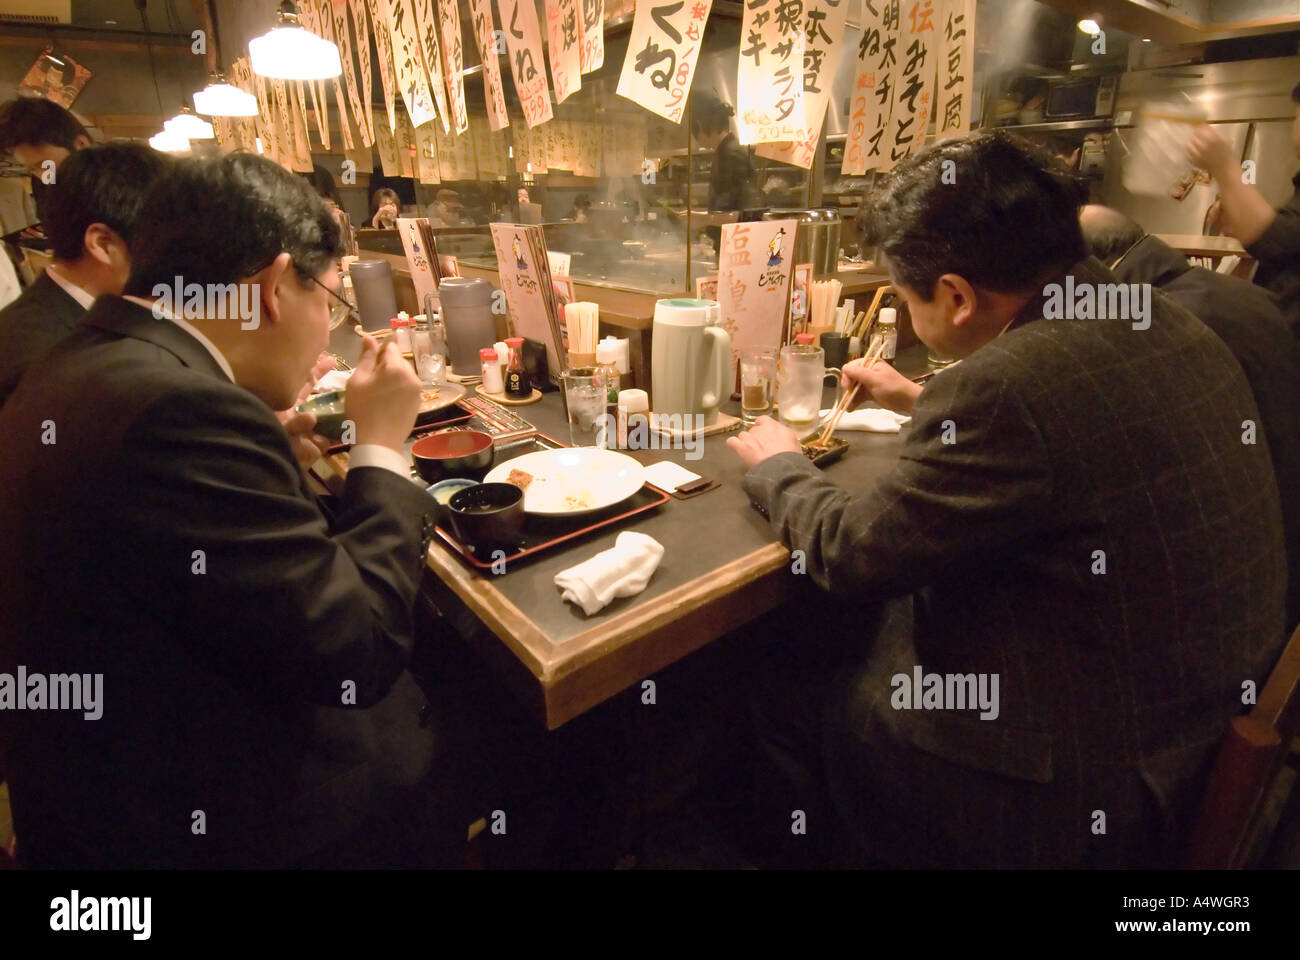 People eat a meal  at an izakaya restaurant in Sapporo Hokkaido Japan Stock Photo